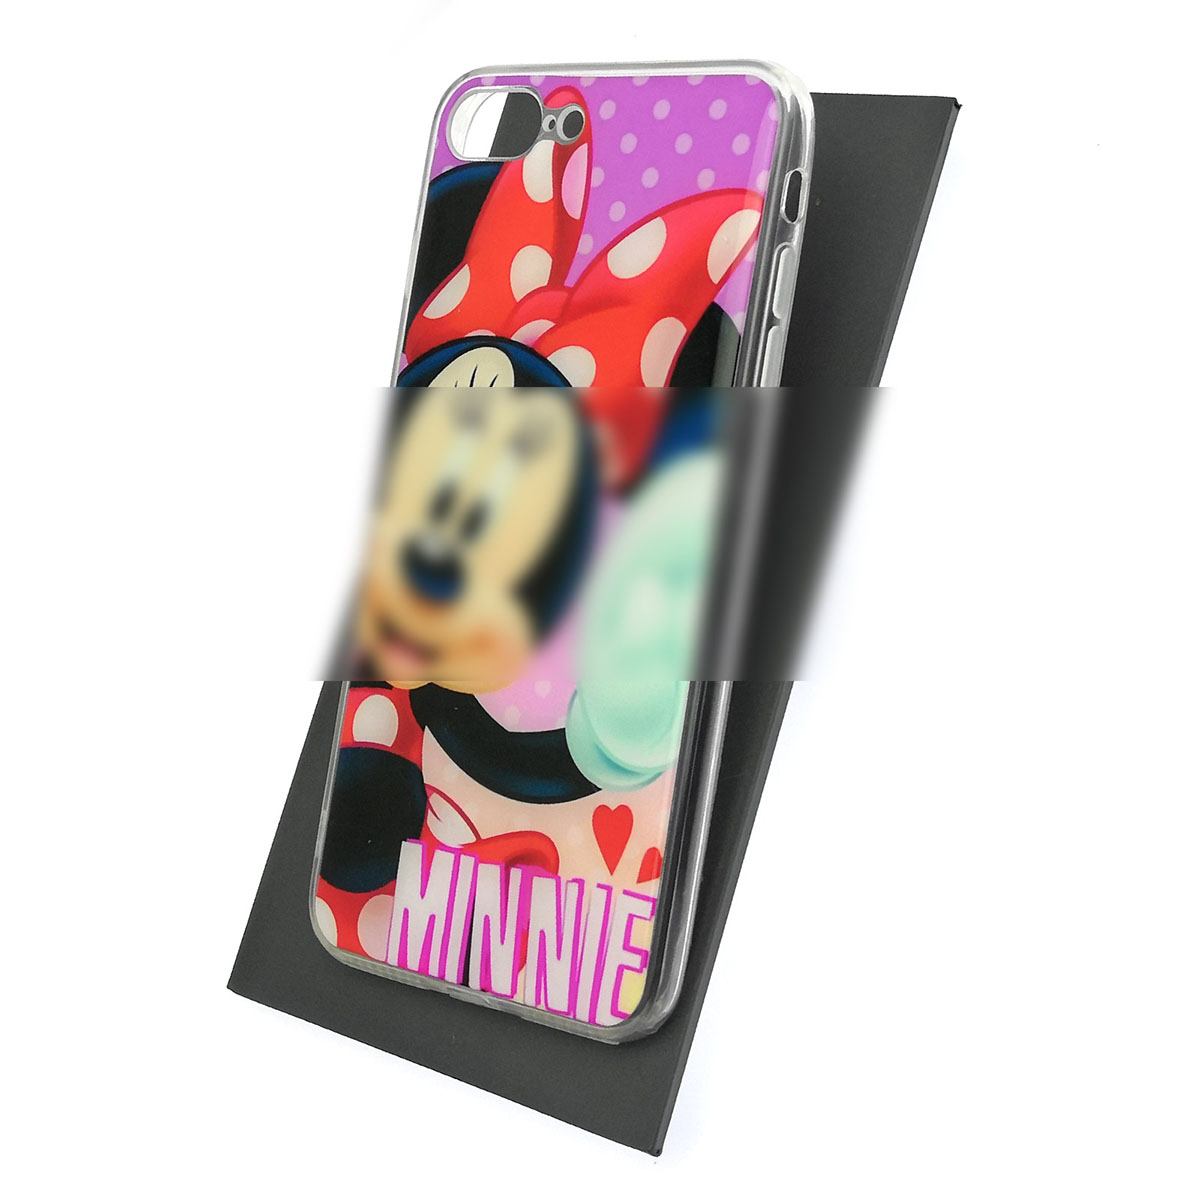 Чехол накладка для APPLE iPhone 7 Plus, iPhone 8 Plus, силикон, глянцевый, рисунок Minnie